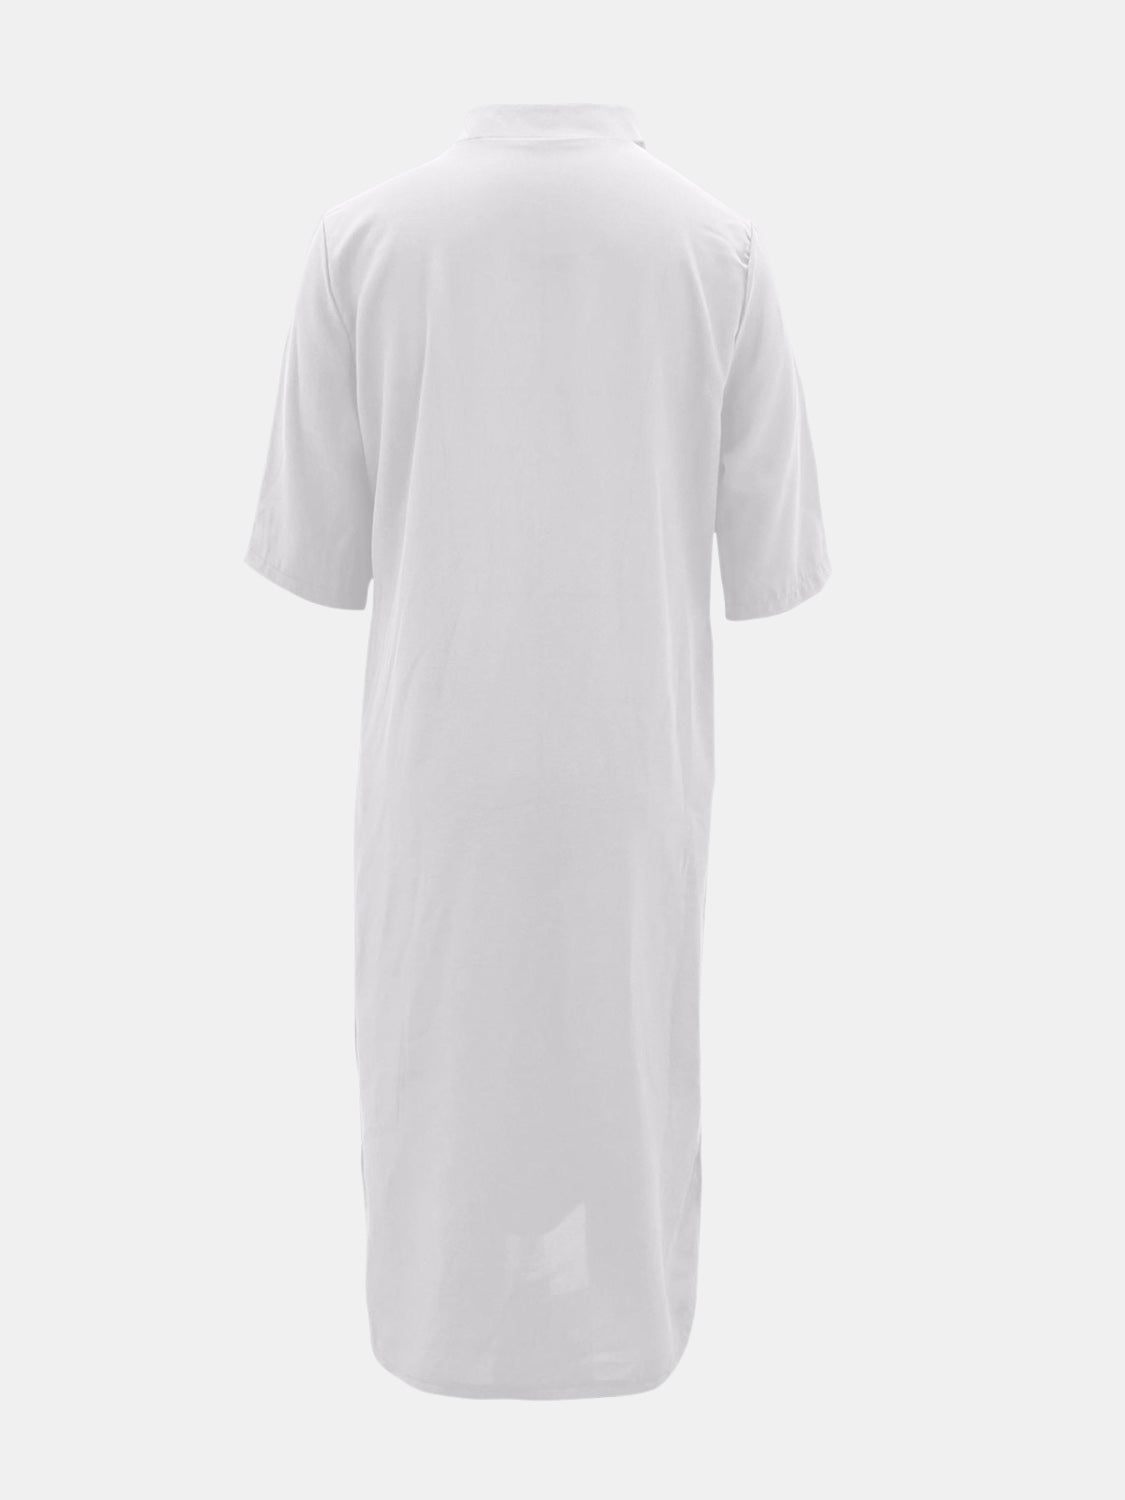 Versatile white maxi dress with an elegant V-neckline and convenient pockets.